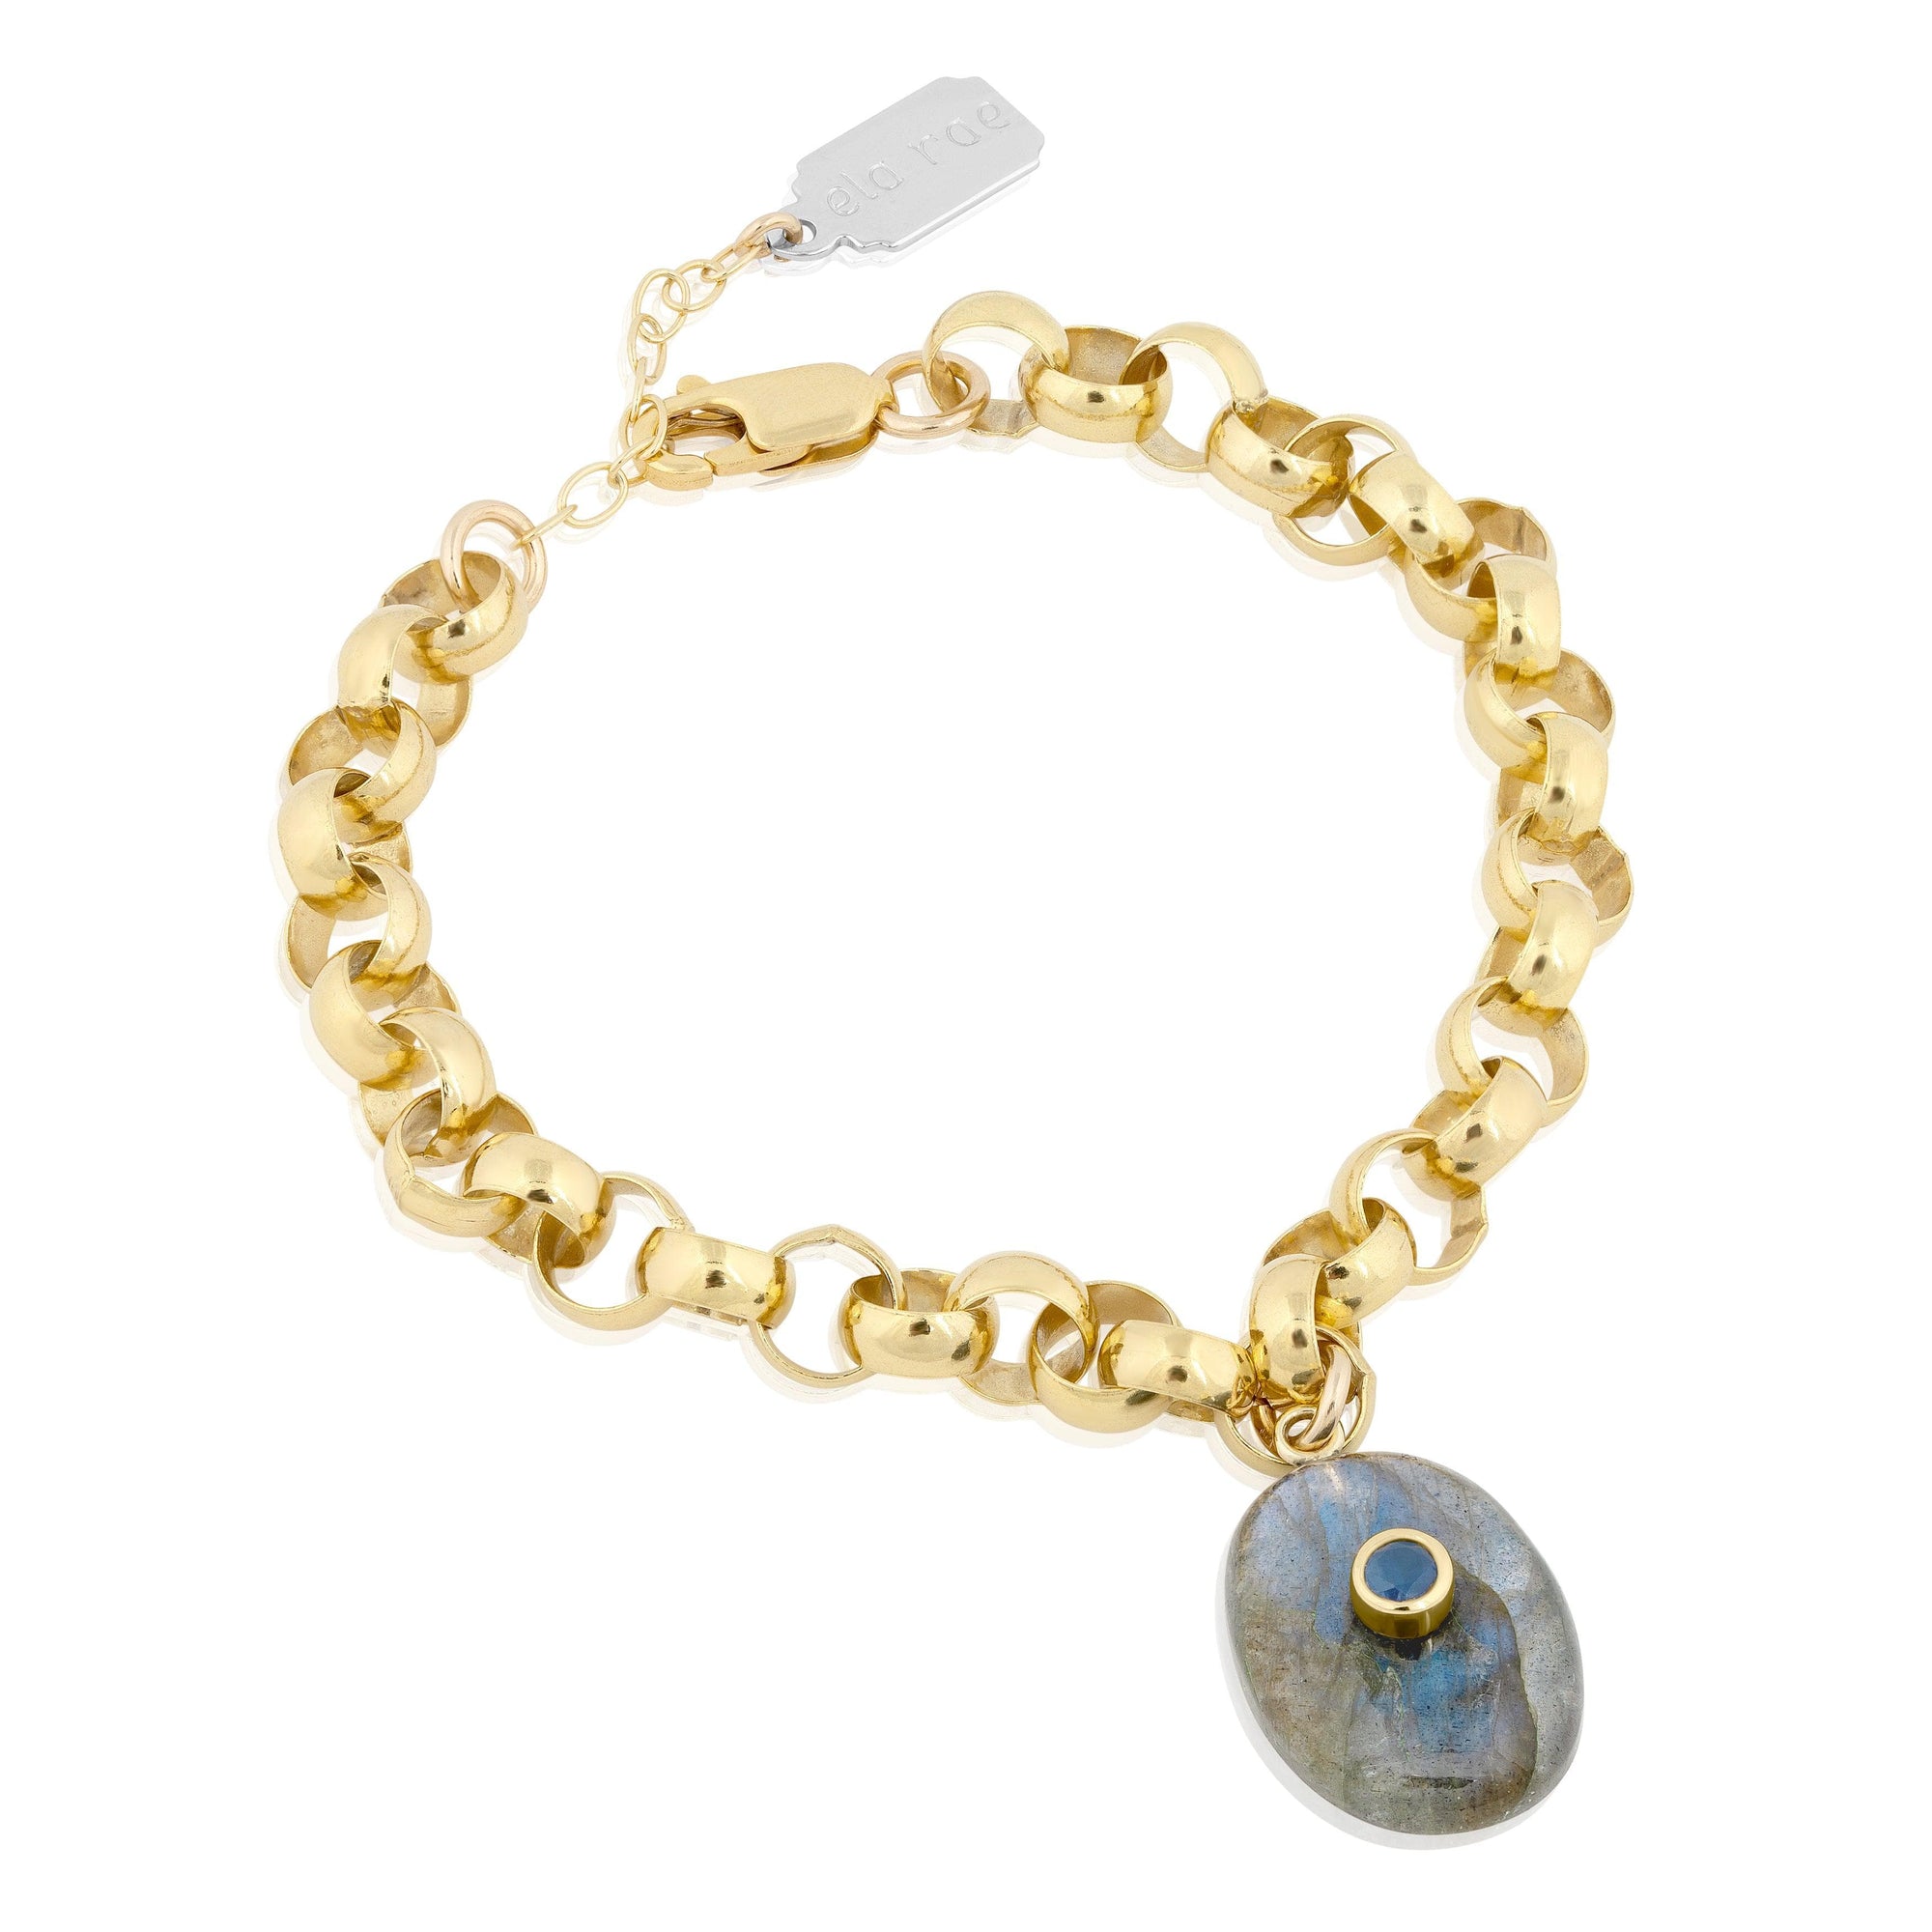 jumbo rolo bracelet | oval stone